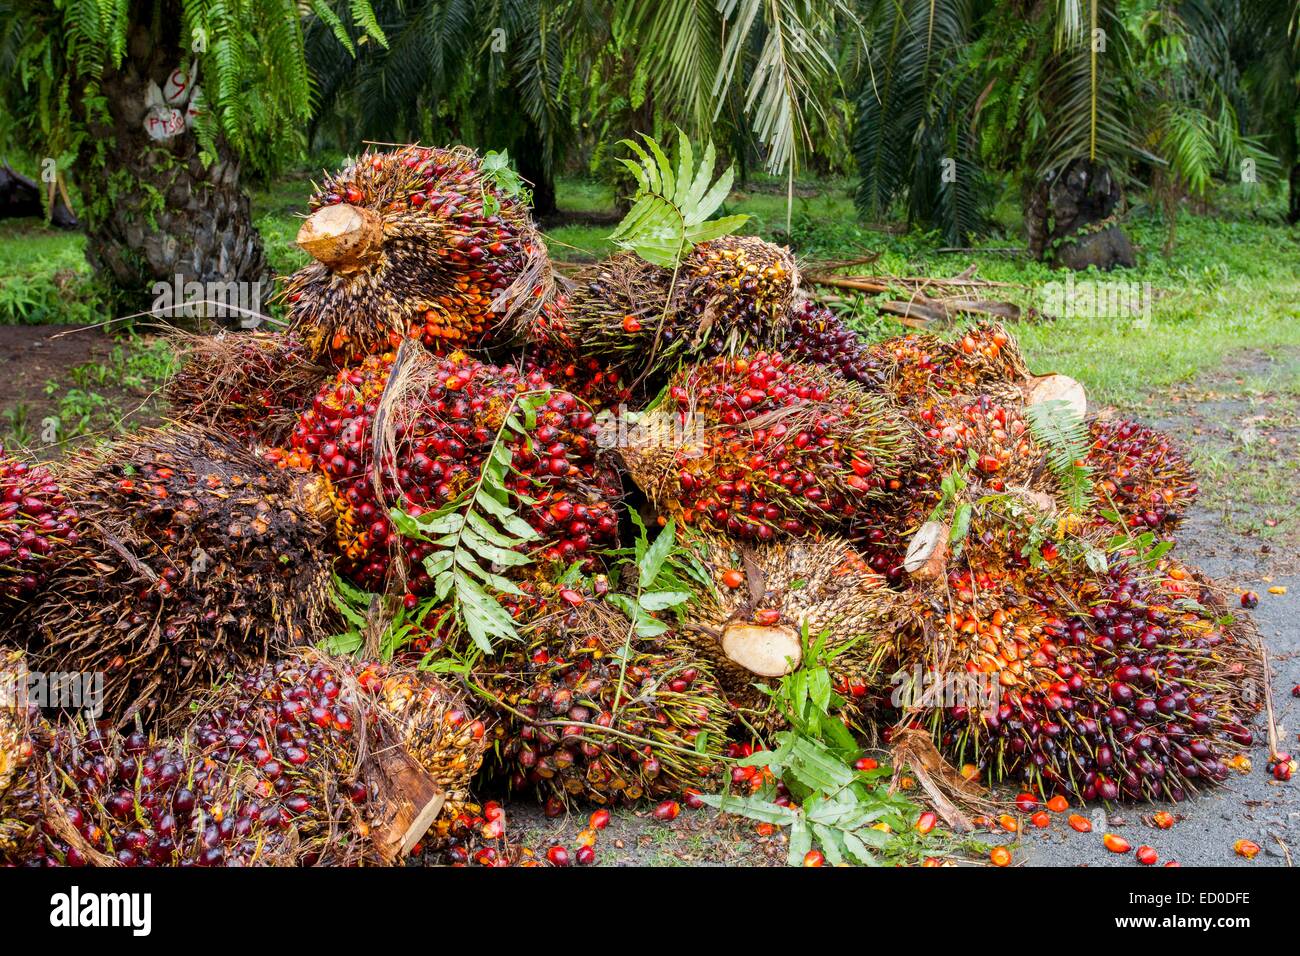 Malaysia, Sabah state, Sukau , Oil palm tree, African oil palm (Elaeis guineensis), fruits Stock Photo